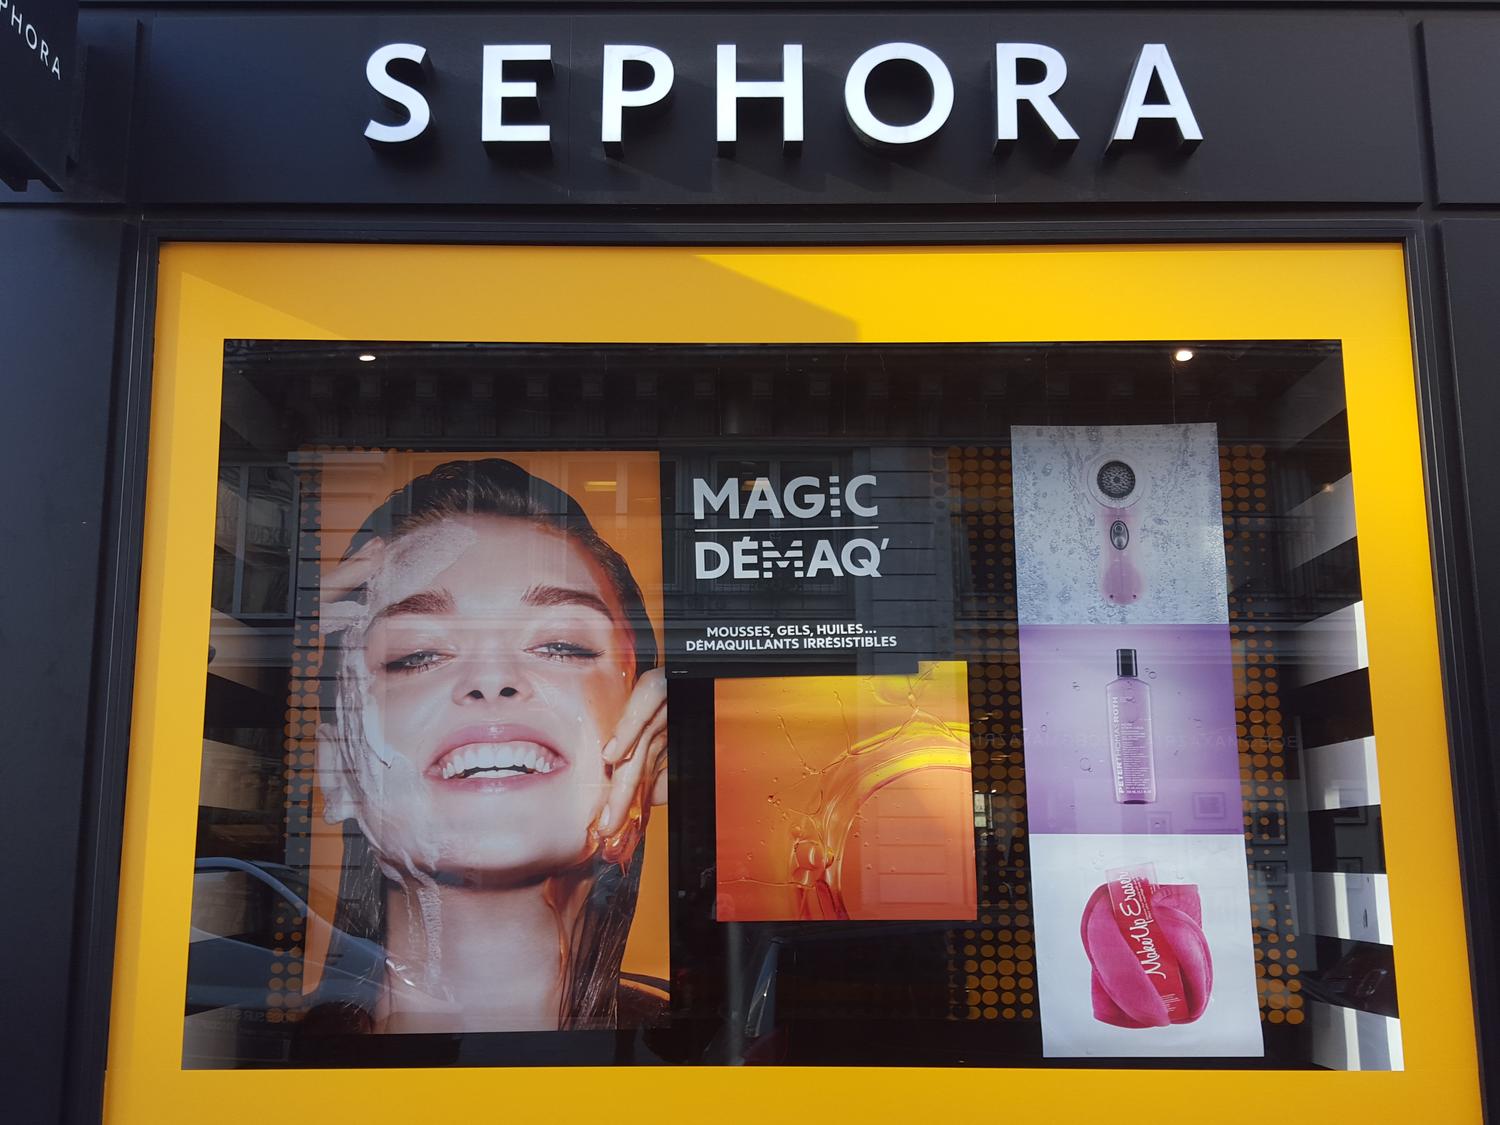 Sephora-Magic Démaq橱窗